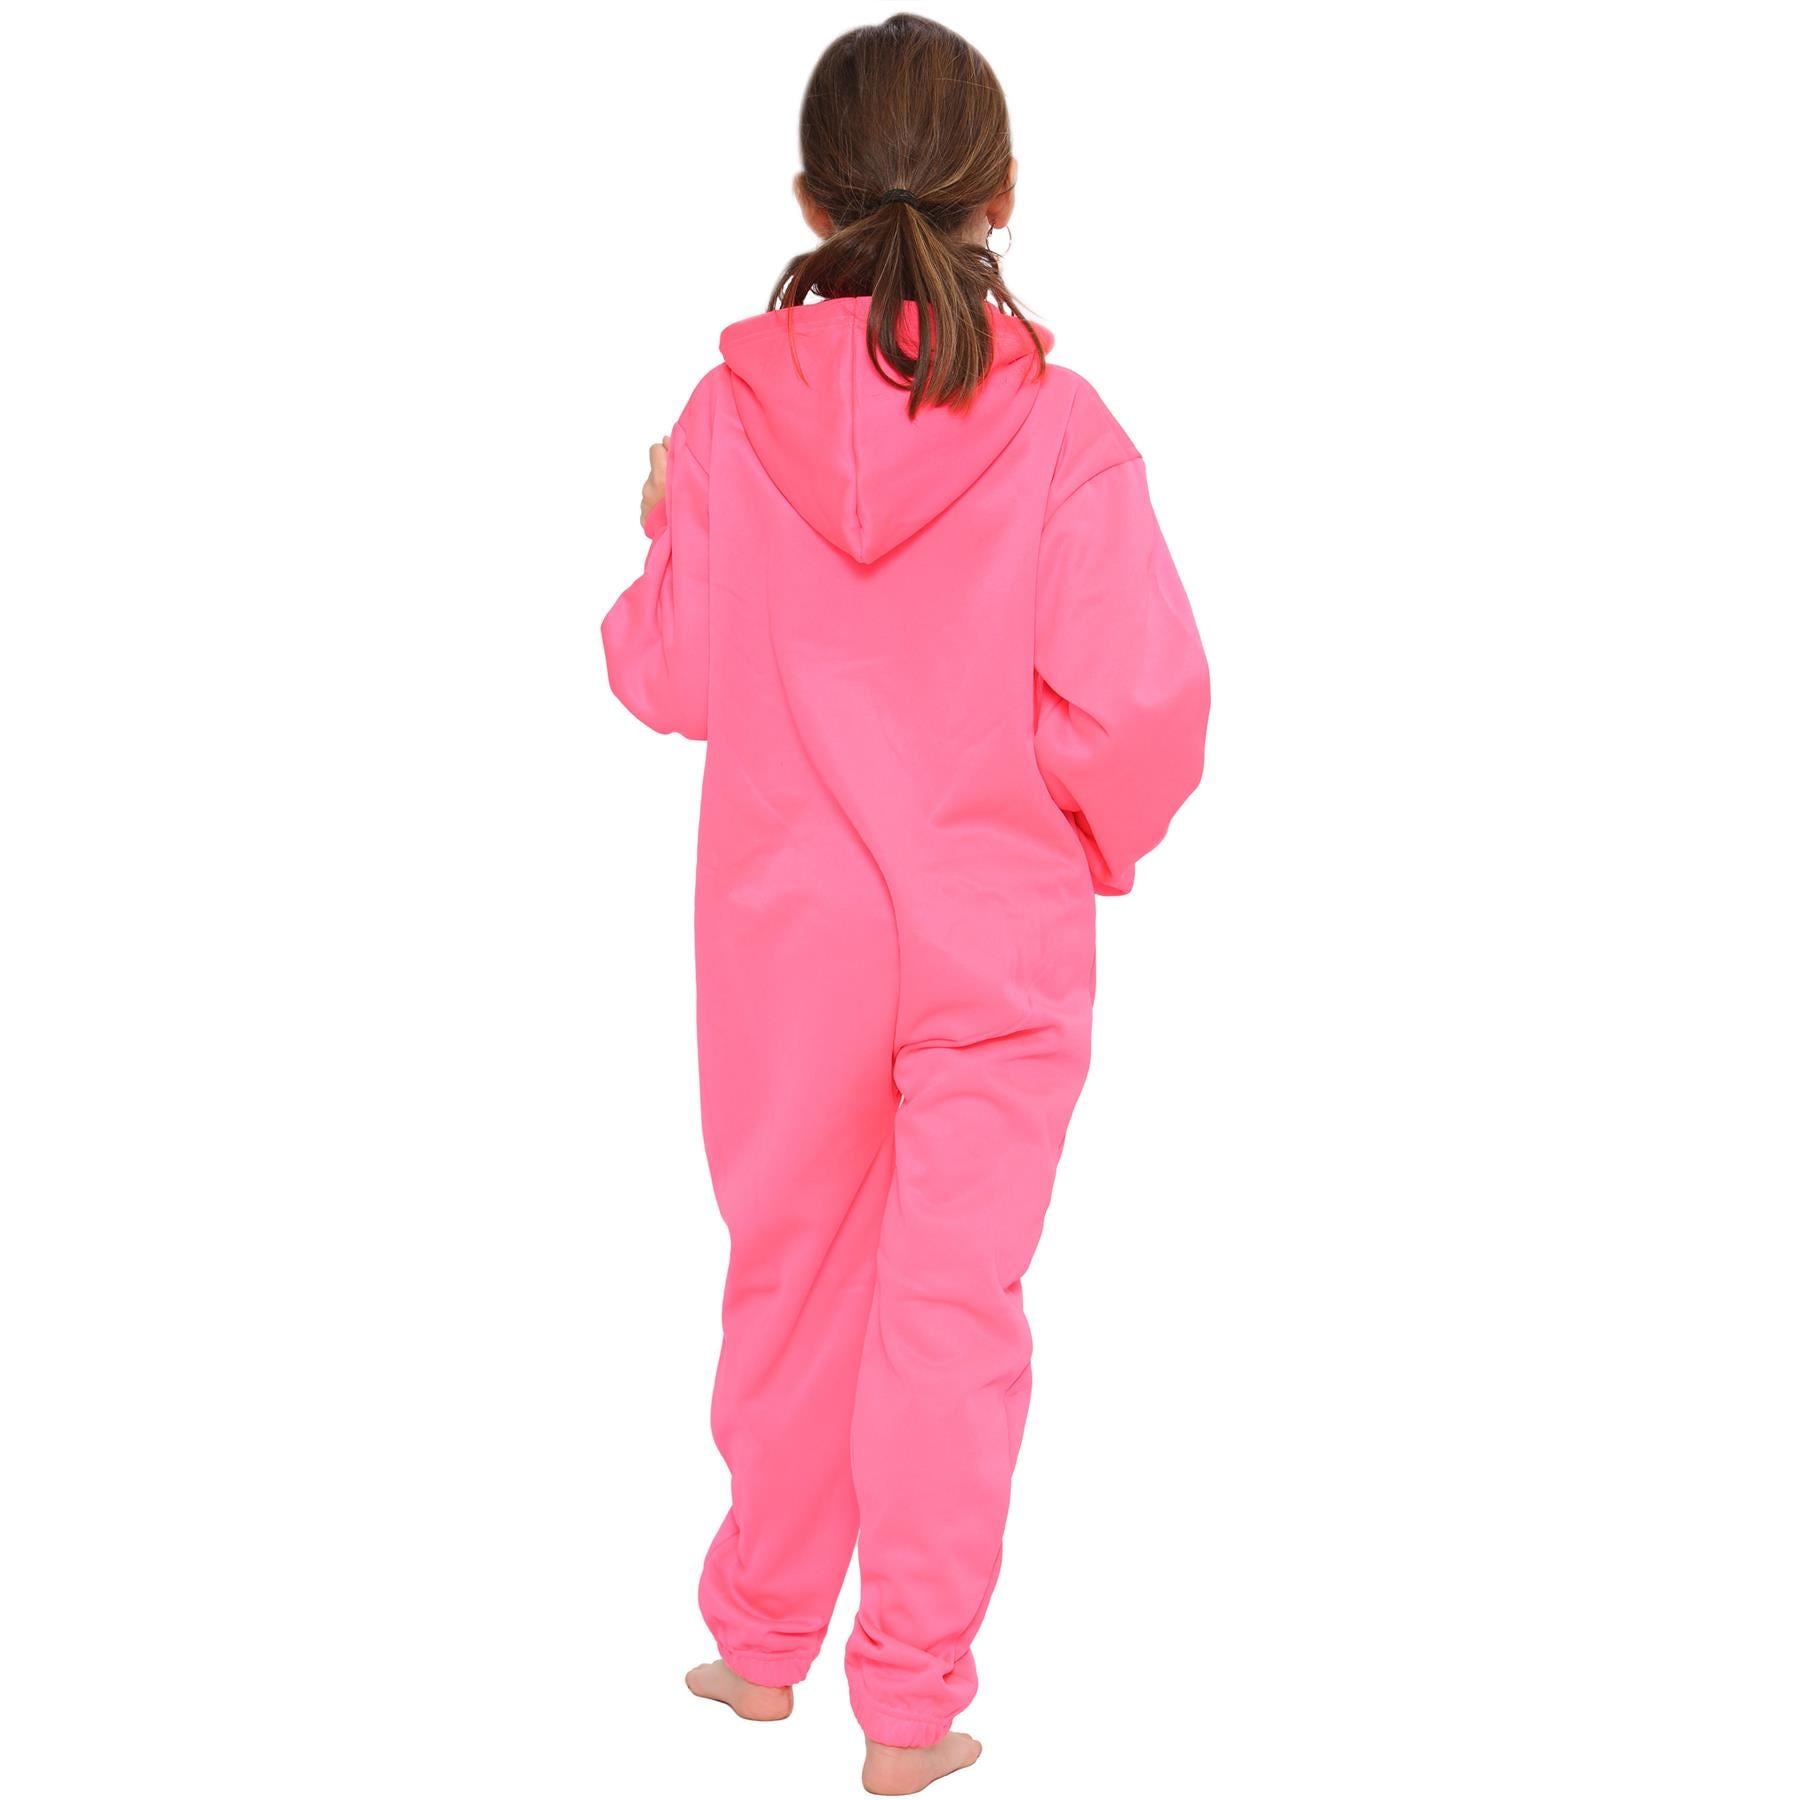 Kids Boys Girls Unisex Onesie Super Soft Fleece Hooded Zip Up Loungewear Costume